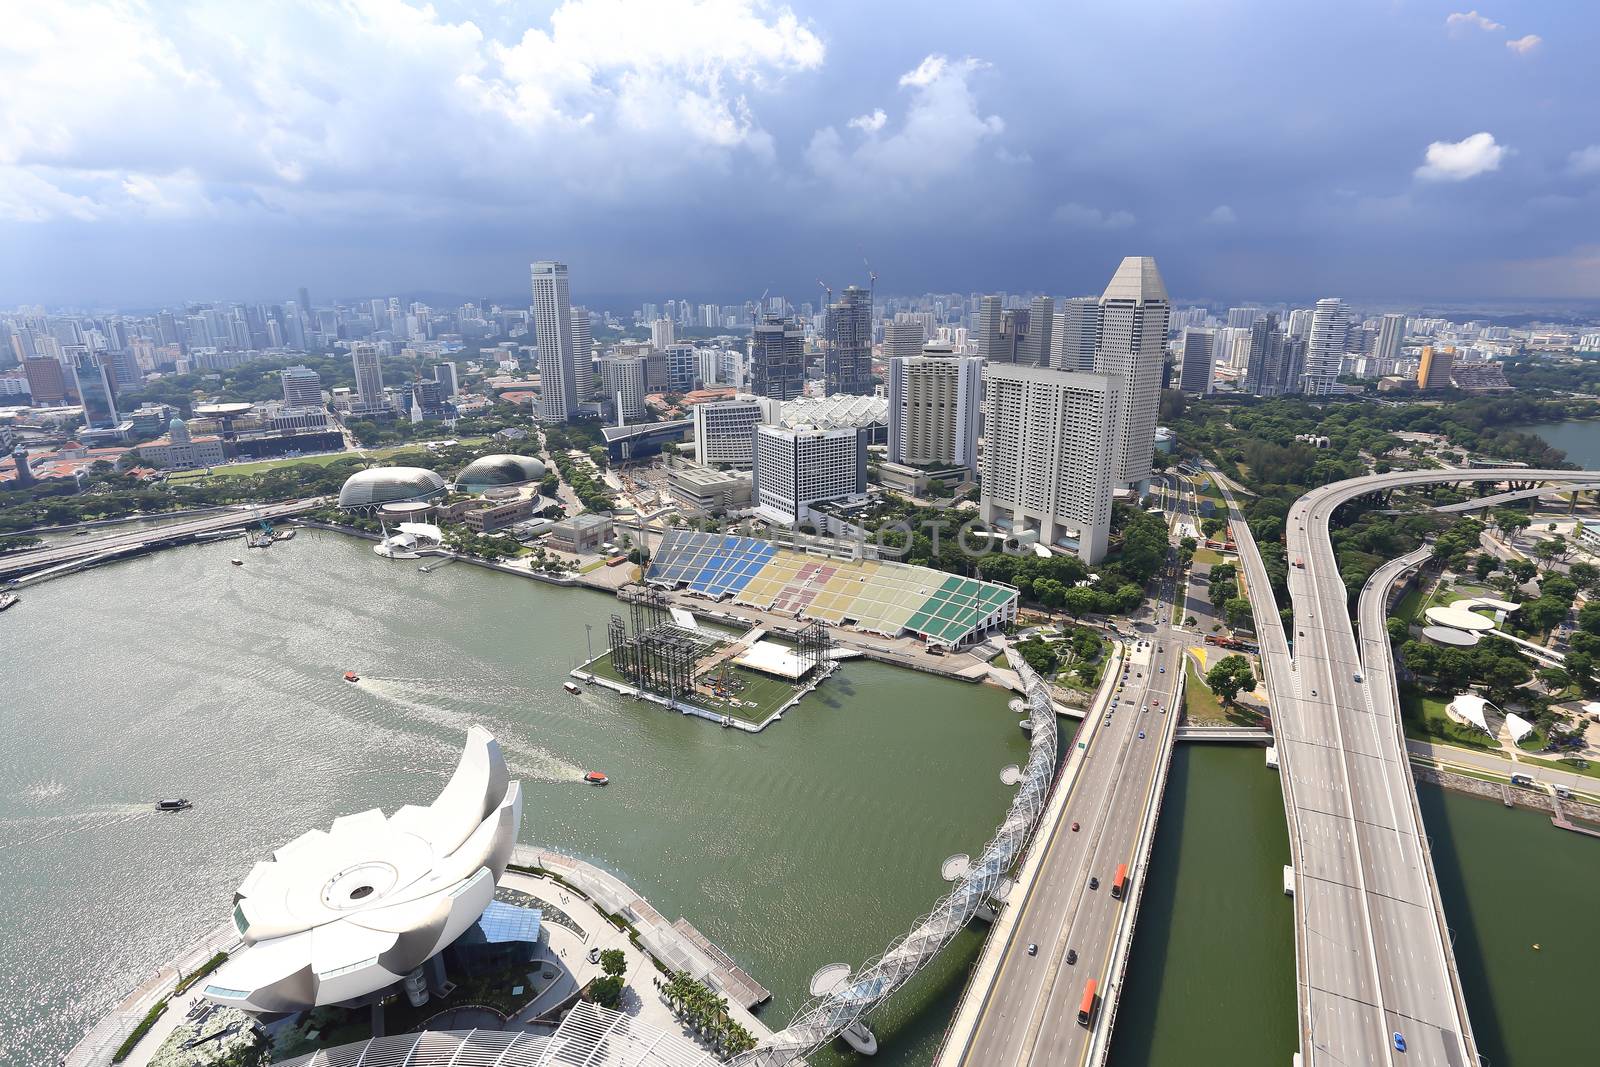 Bird's eye view of Singapore